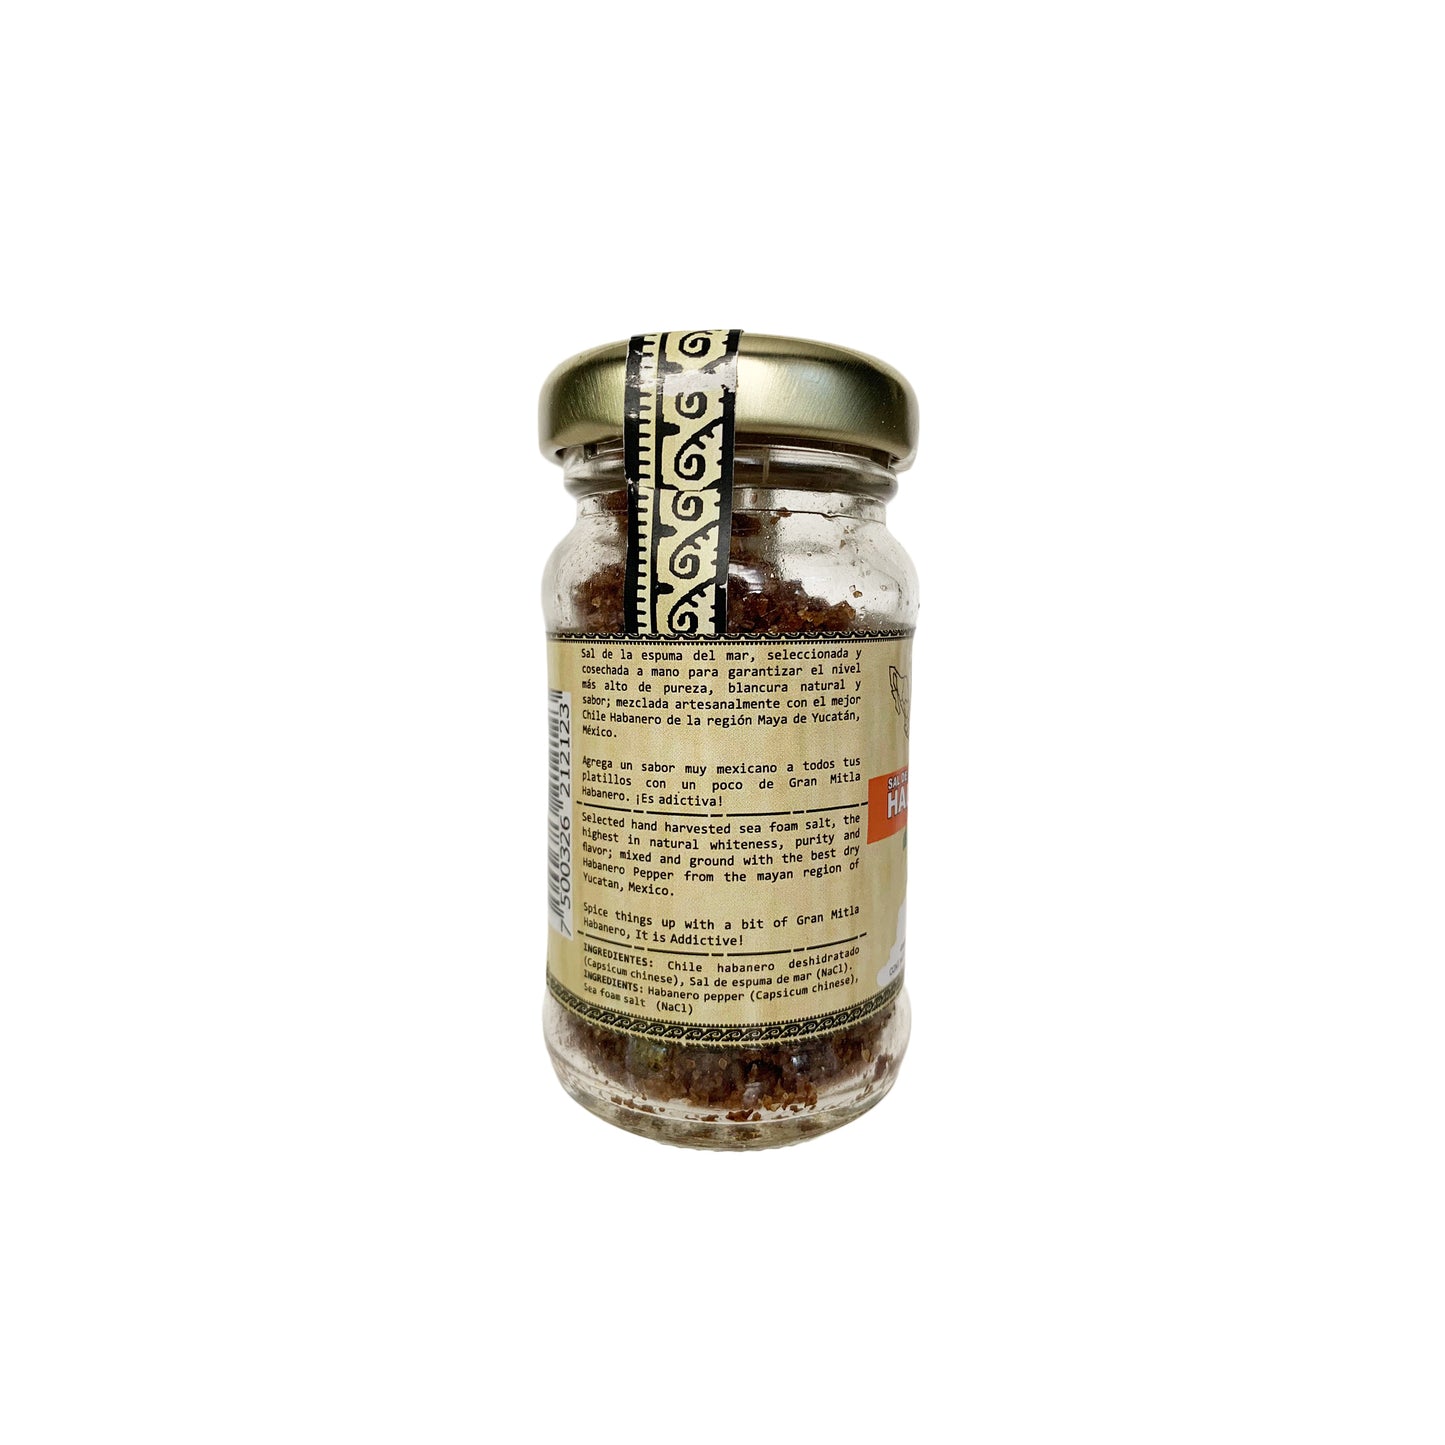 Gran Mitla Habanero Salt from Oaxaca, Mexico (50g)